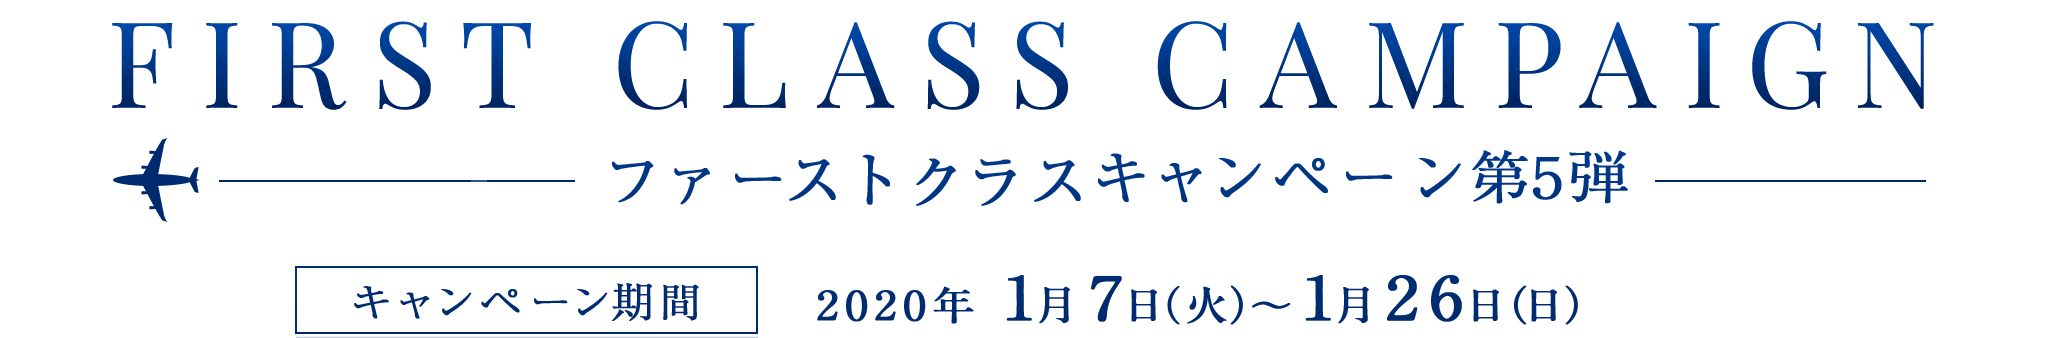 FIRST CLASS CAMPAIGN キャンペーン第5弾期間2020年1月7日（火）〜1月26日（日）